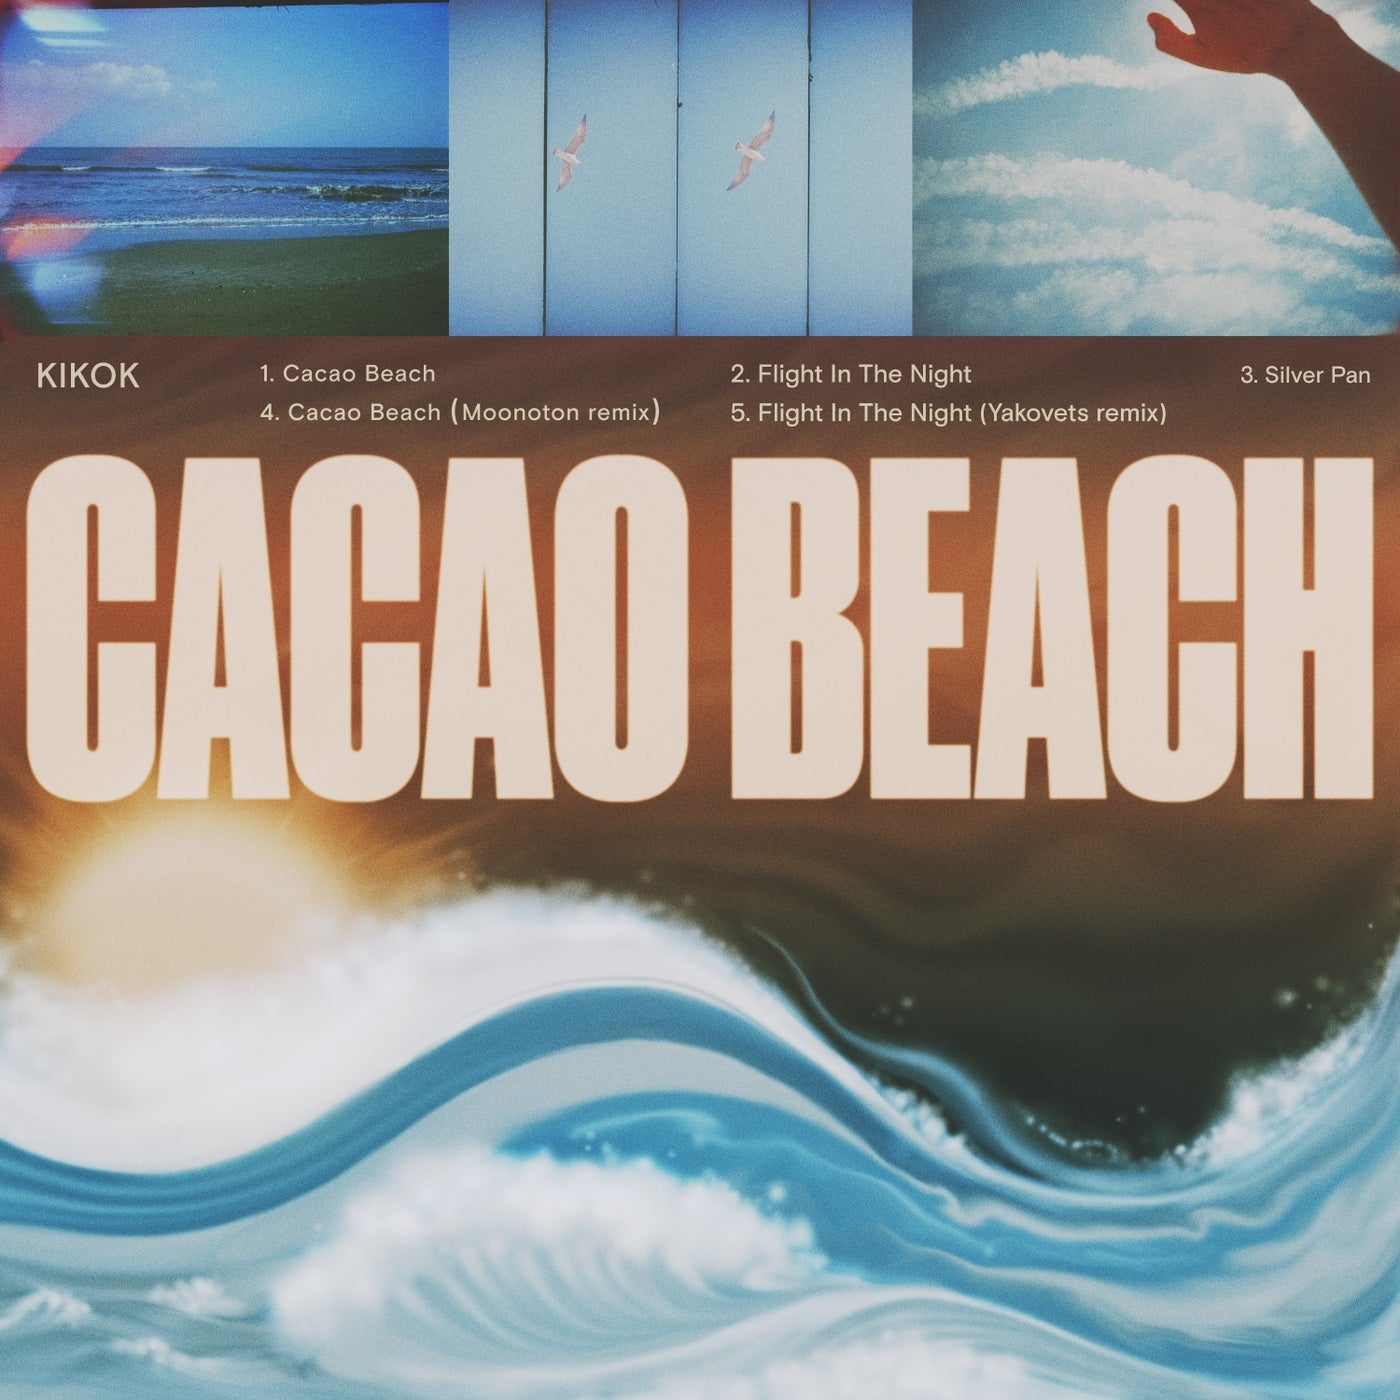 Cacao Beach